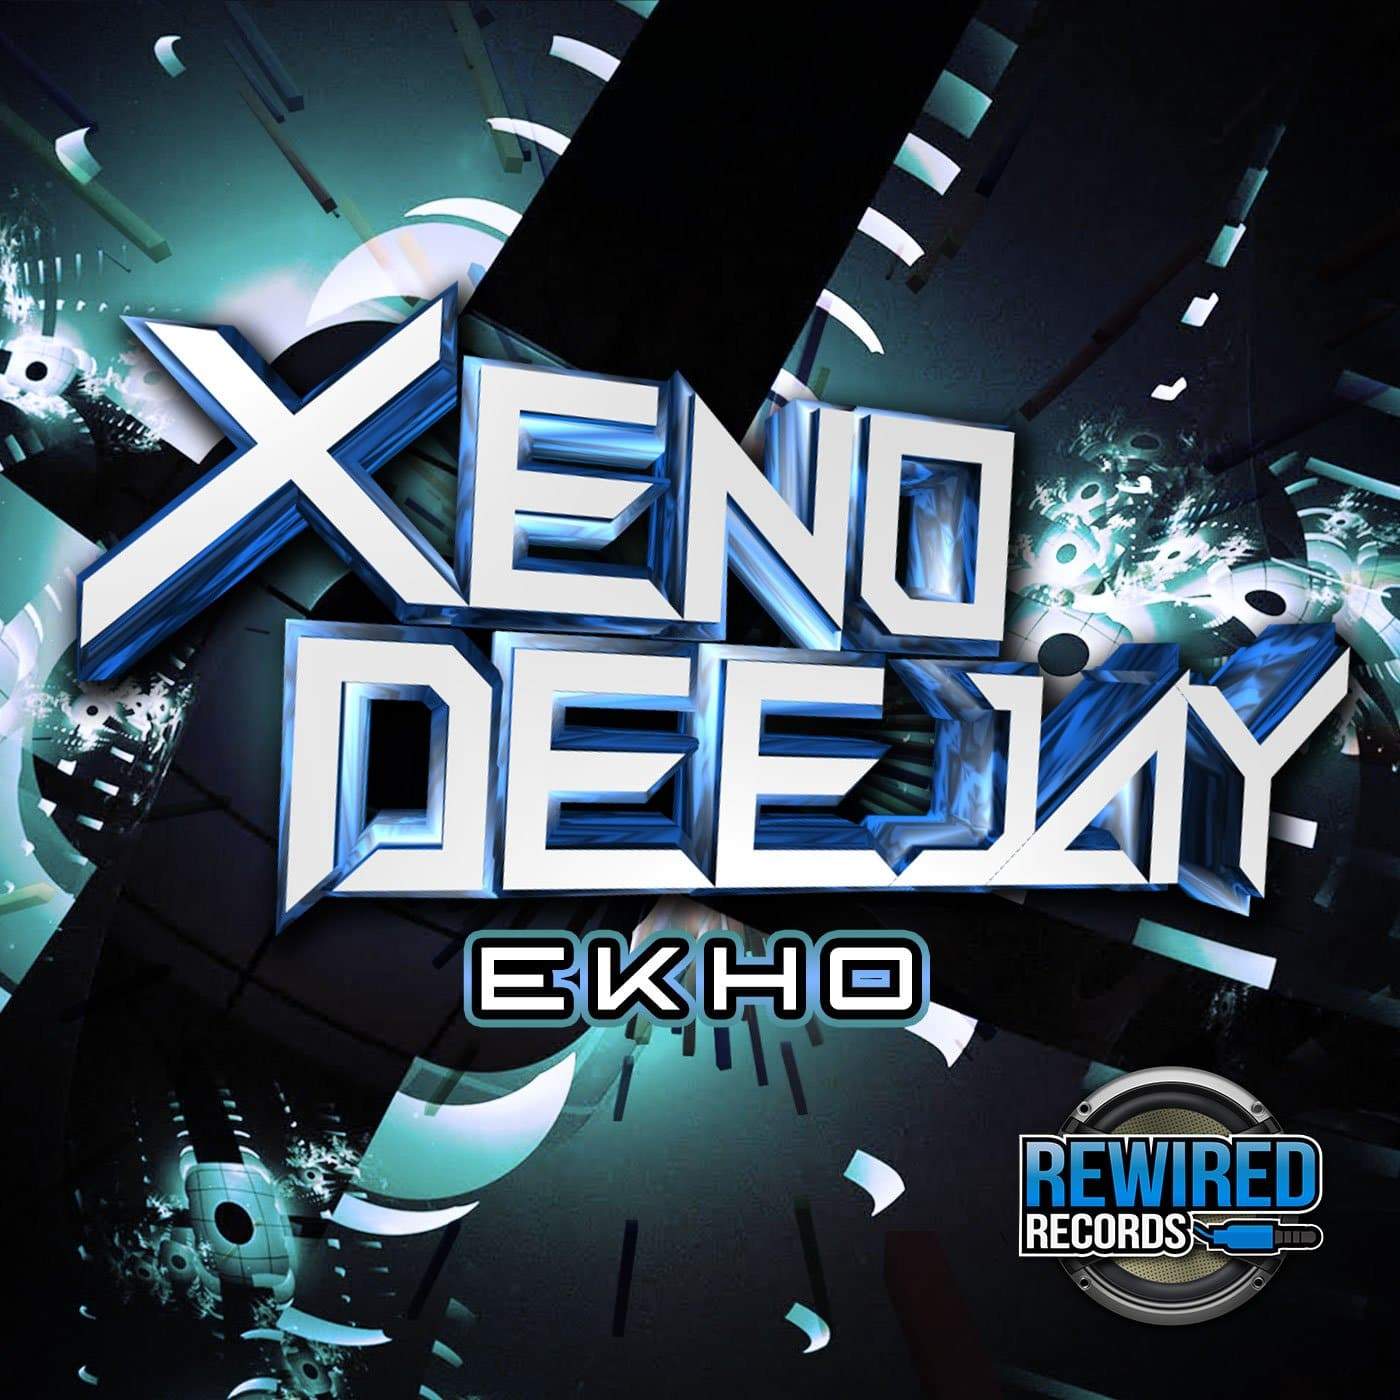 XenoDeejay - Ekho - Rewired Records